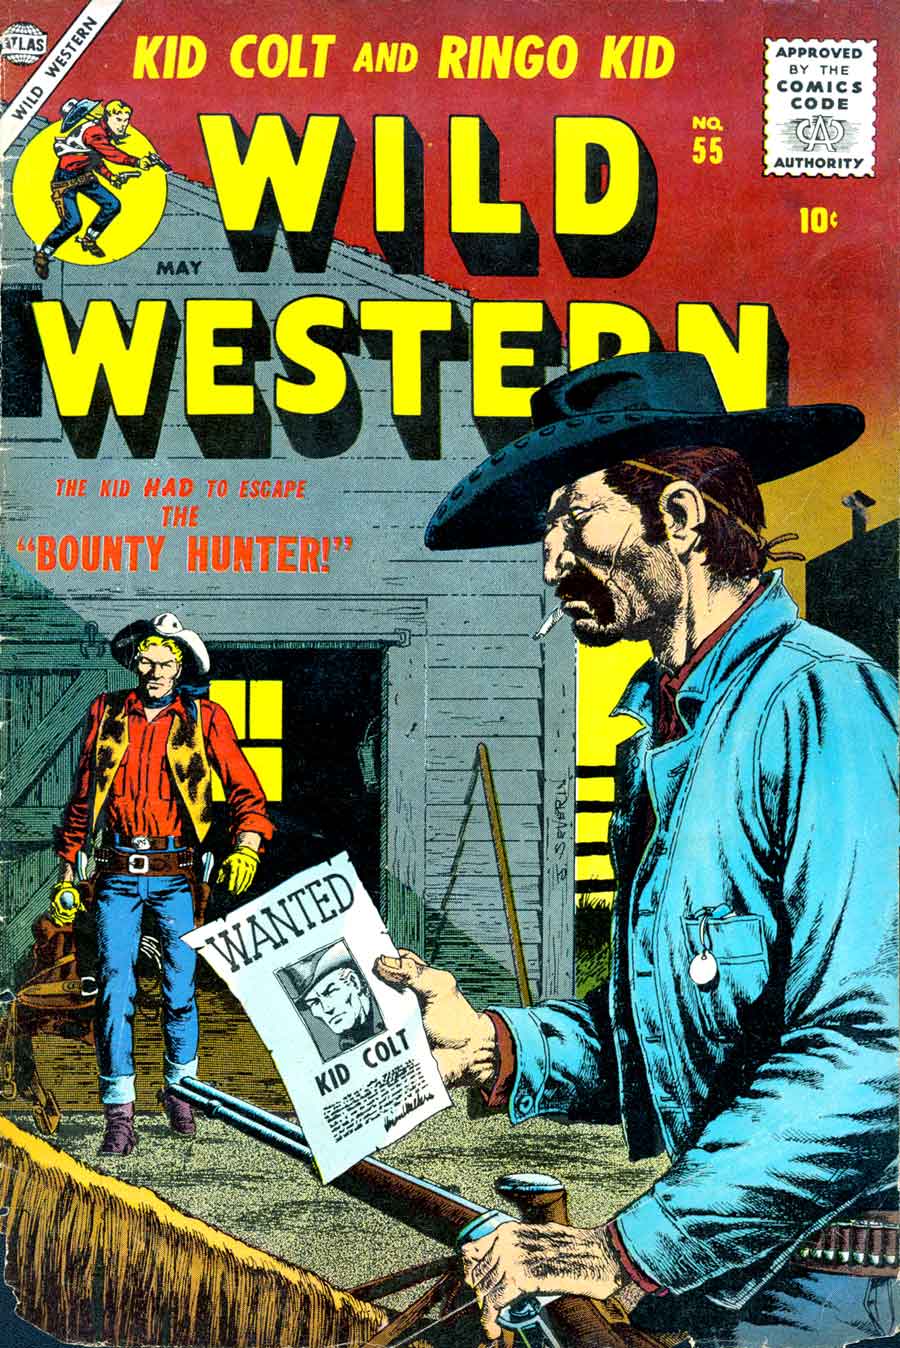 Wild Western #55 golden age atlas western1950s comic book cover